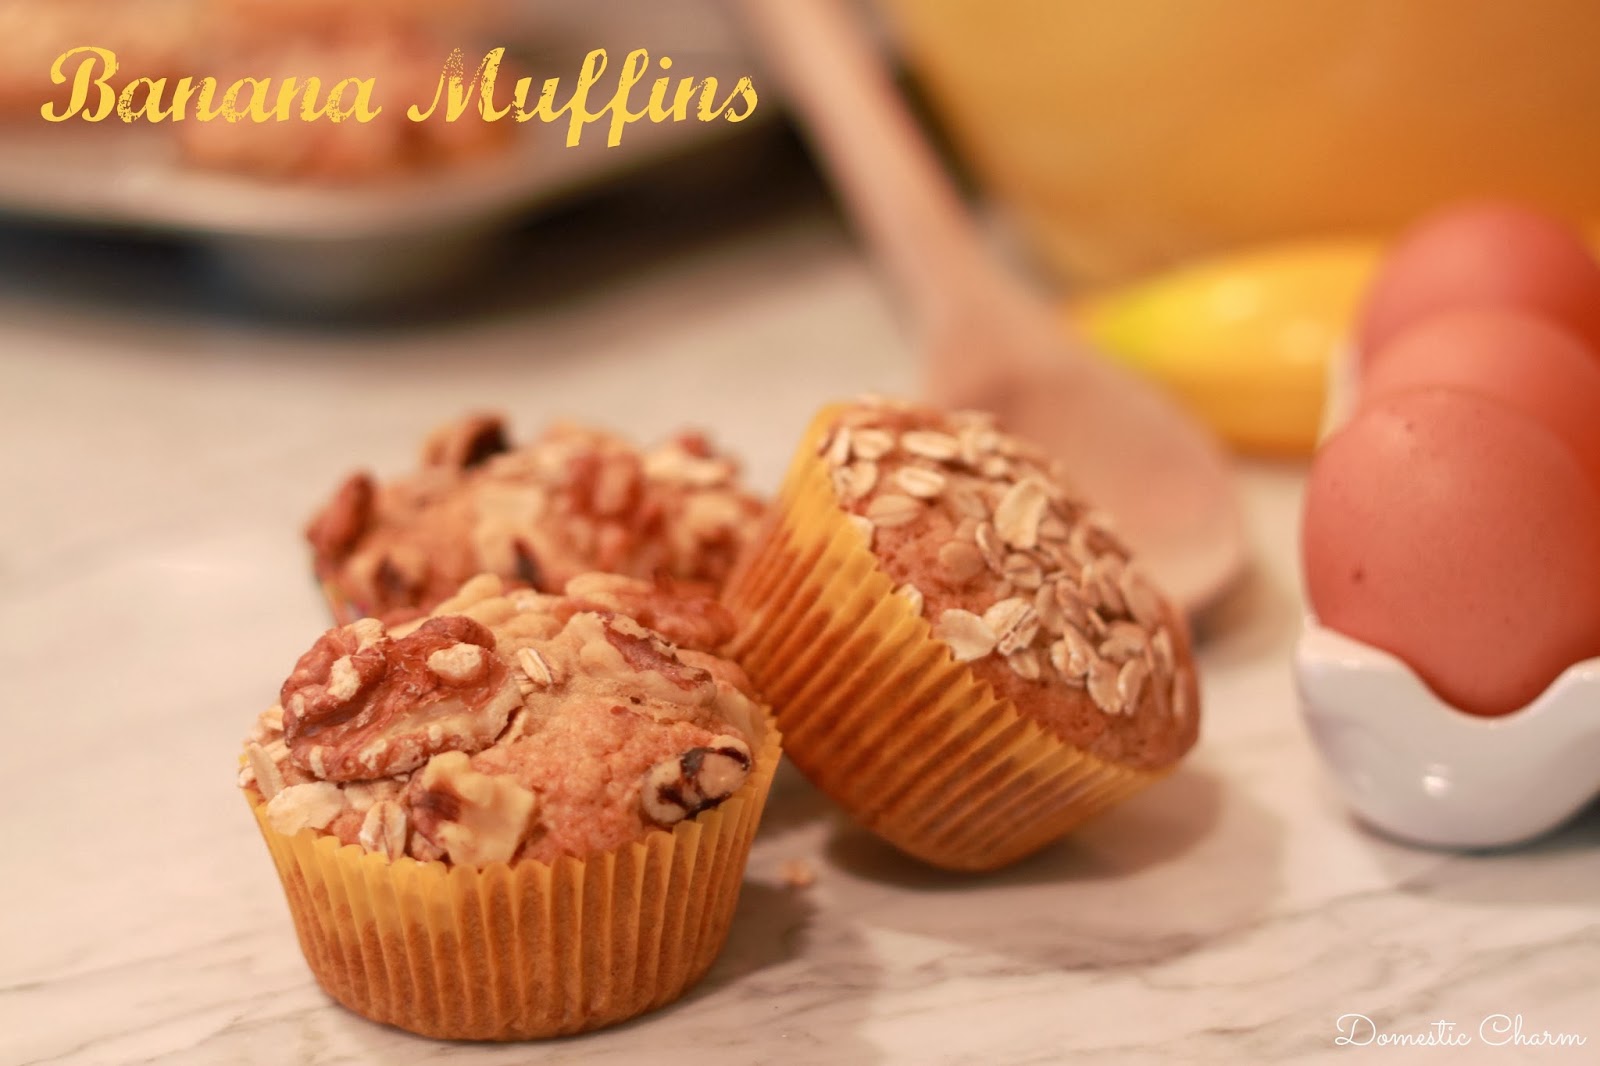 Domestic Charm: Banana Muffins